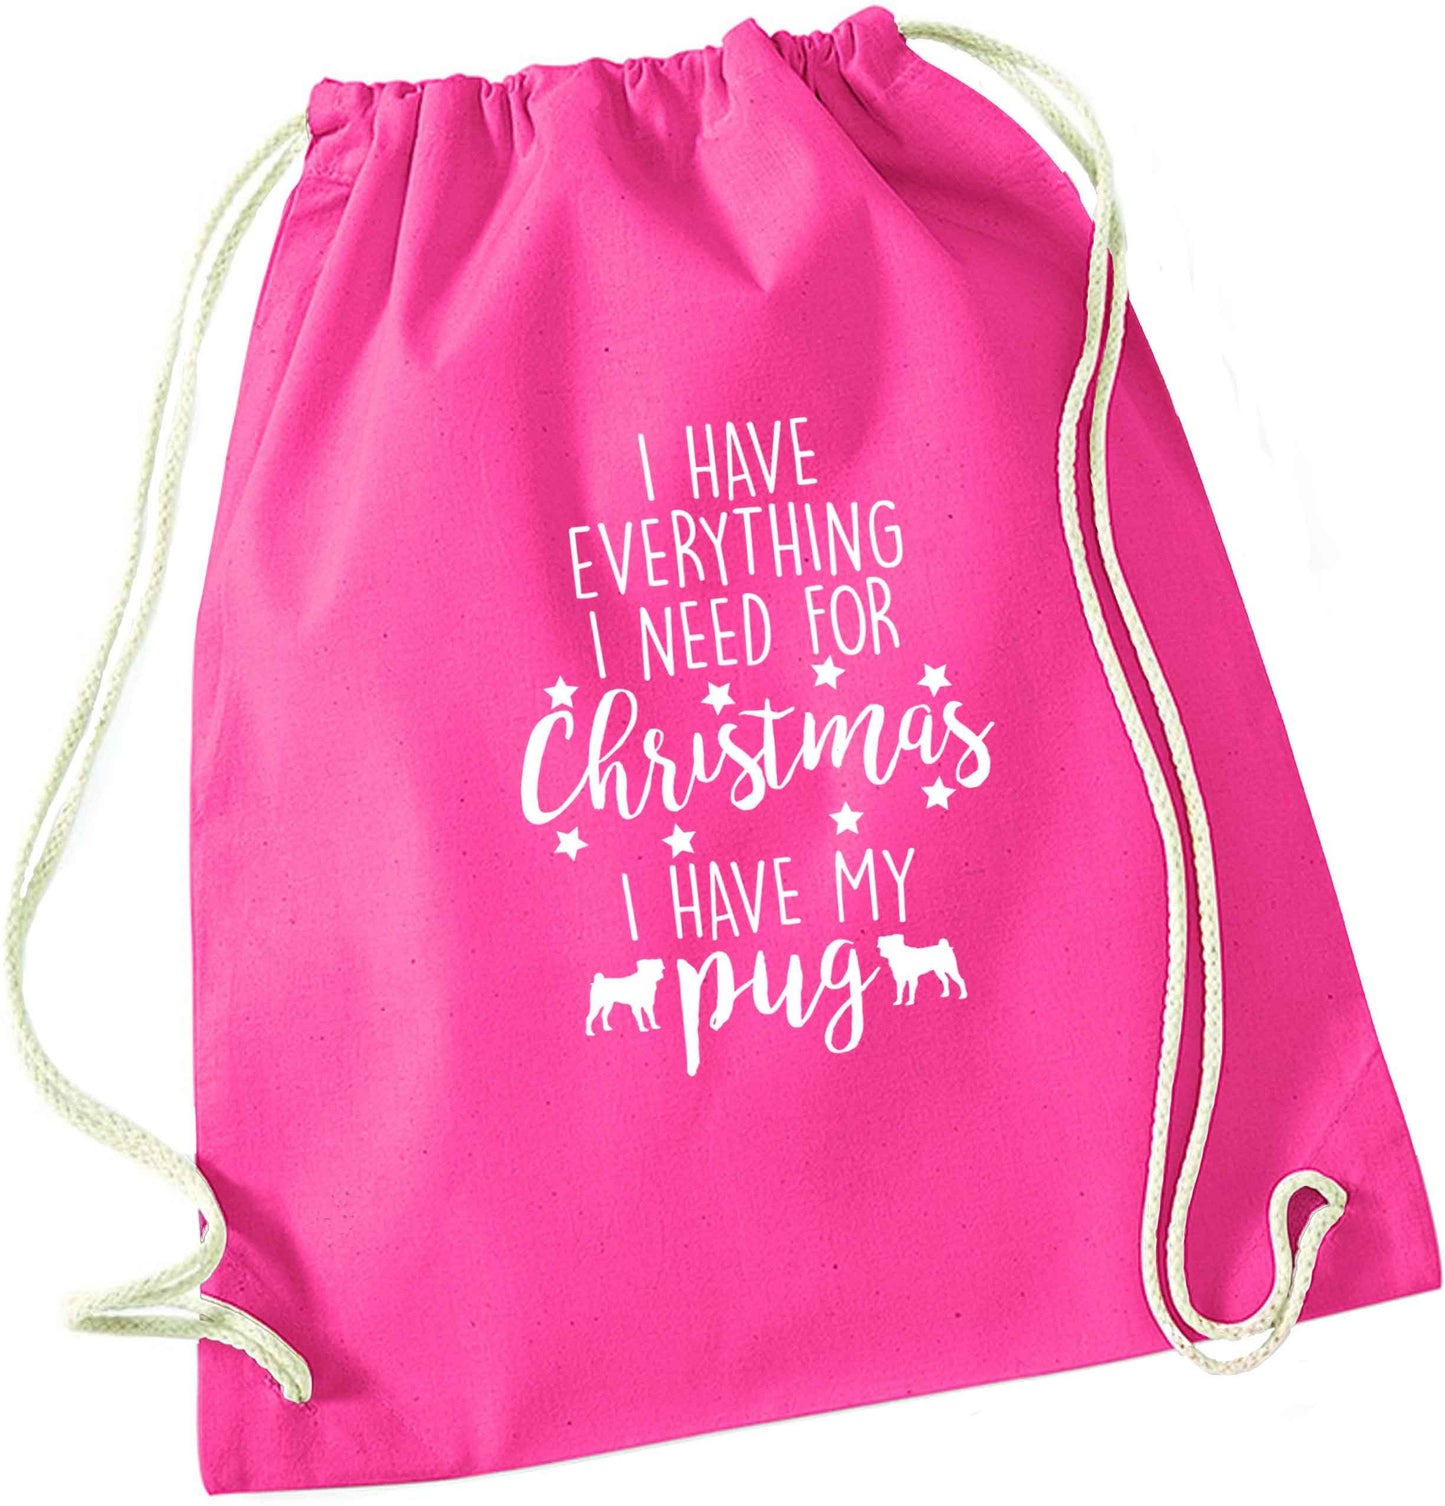 I have everything I need for Christmas I have my pug pink drawstring bag